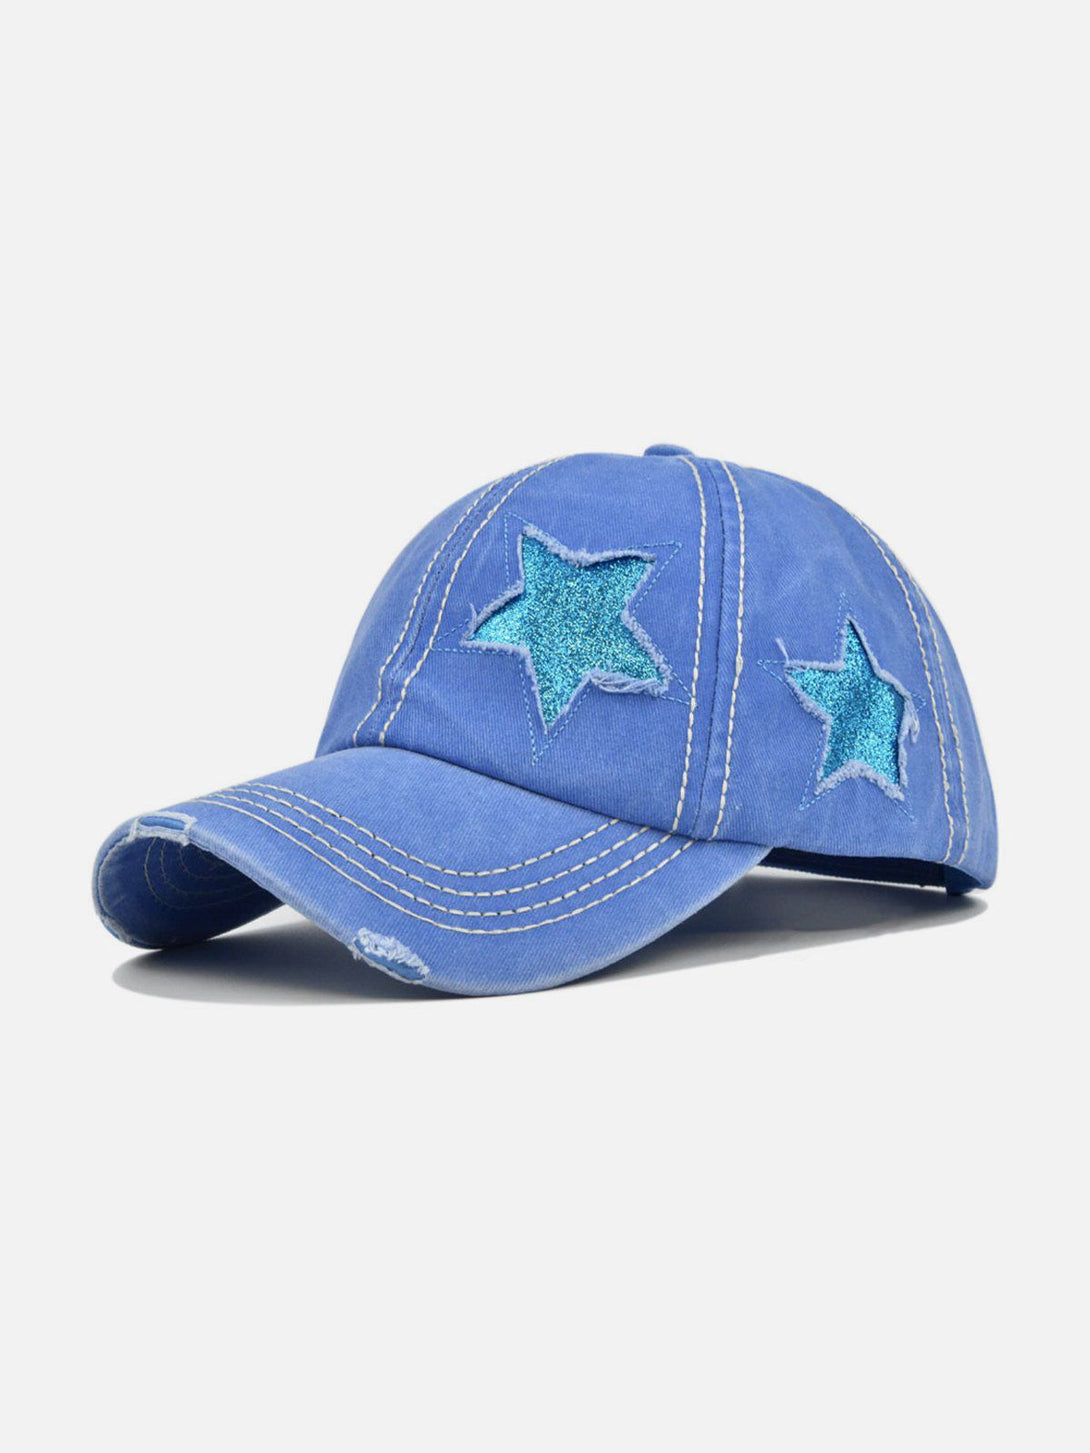 Majesda® - Hole Star Washed Hat- Outfit Ideas - Streetwear Fashion - majesda.com